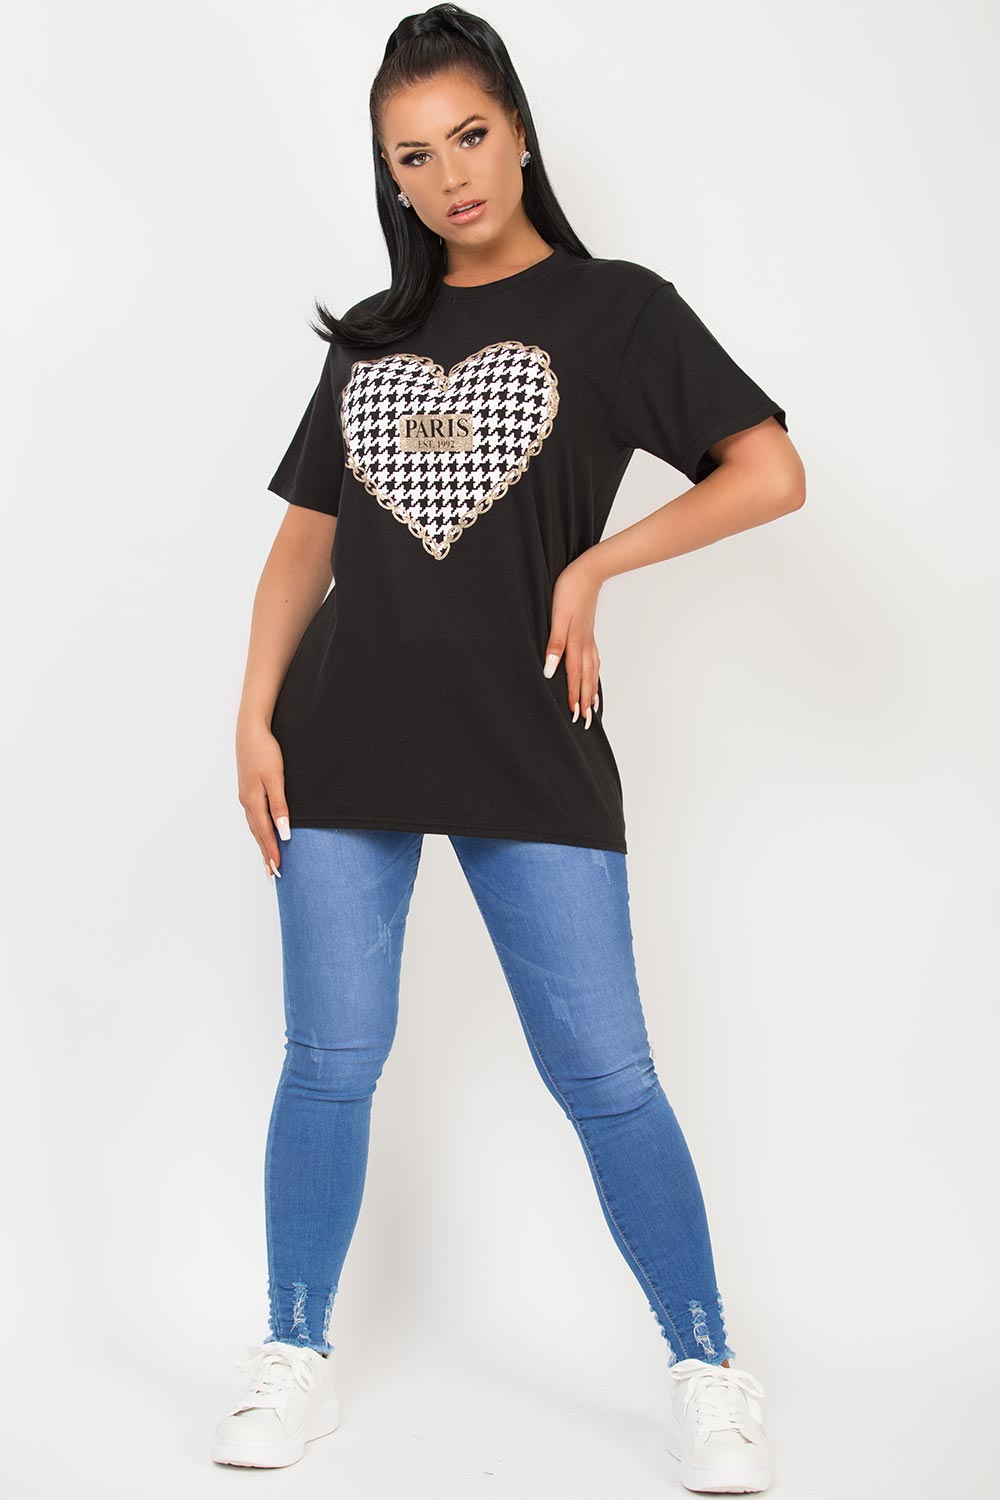 black oversized heart graphic t shirt